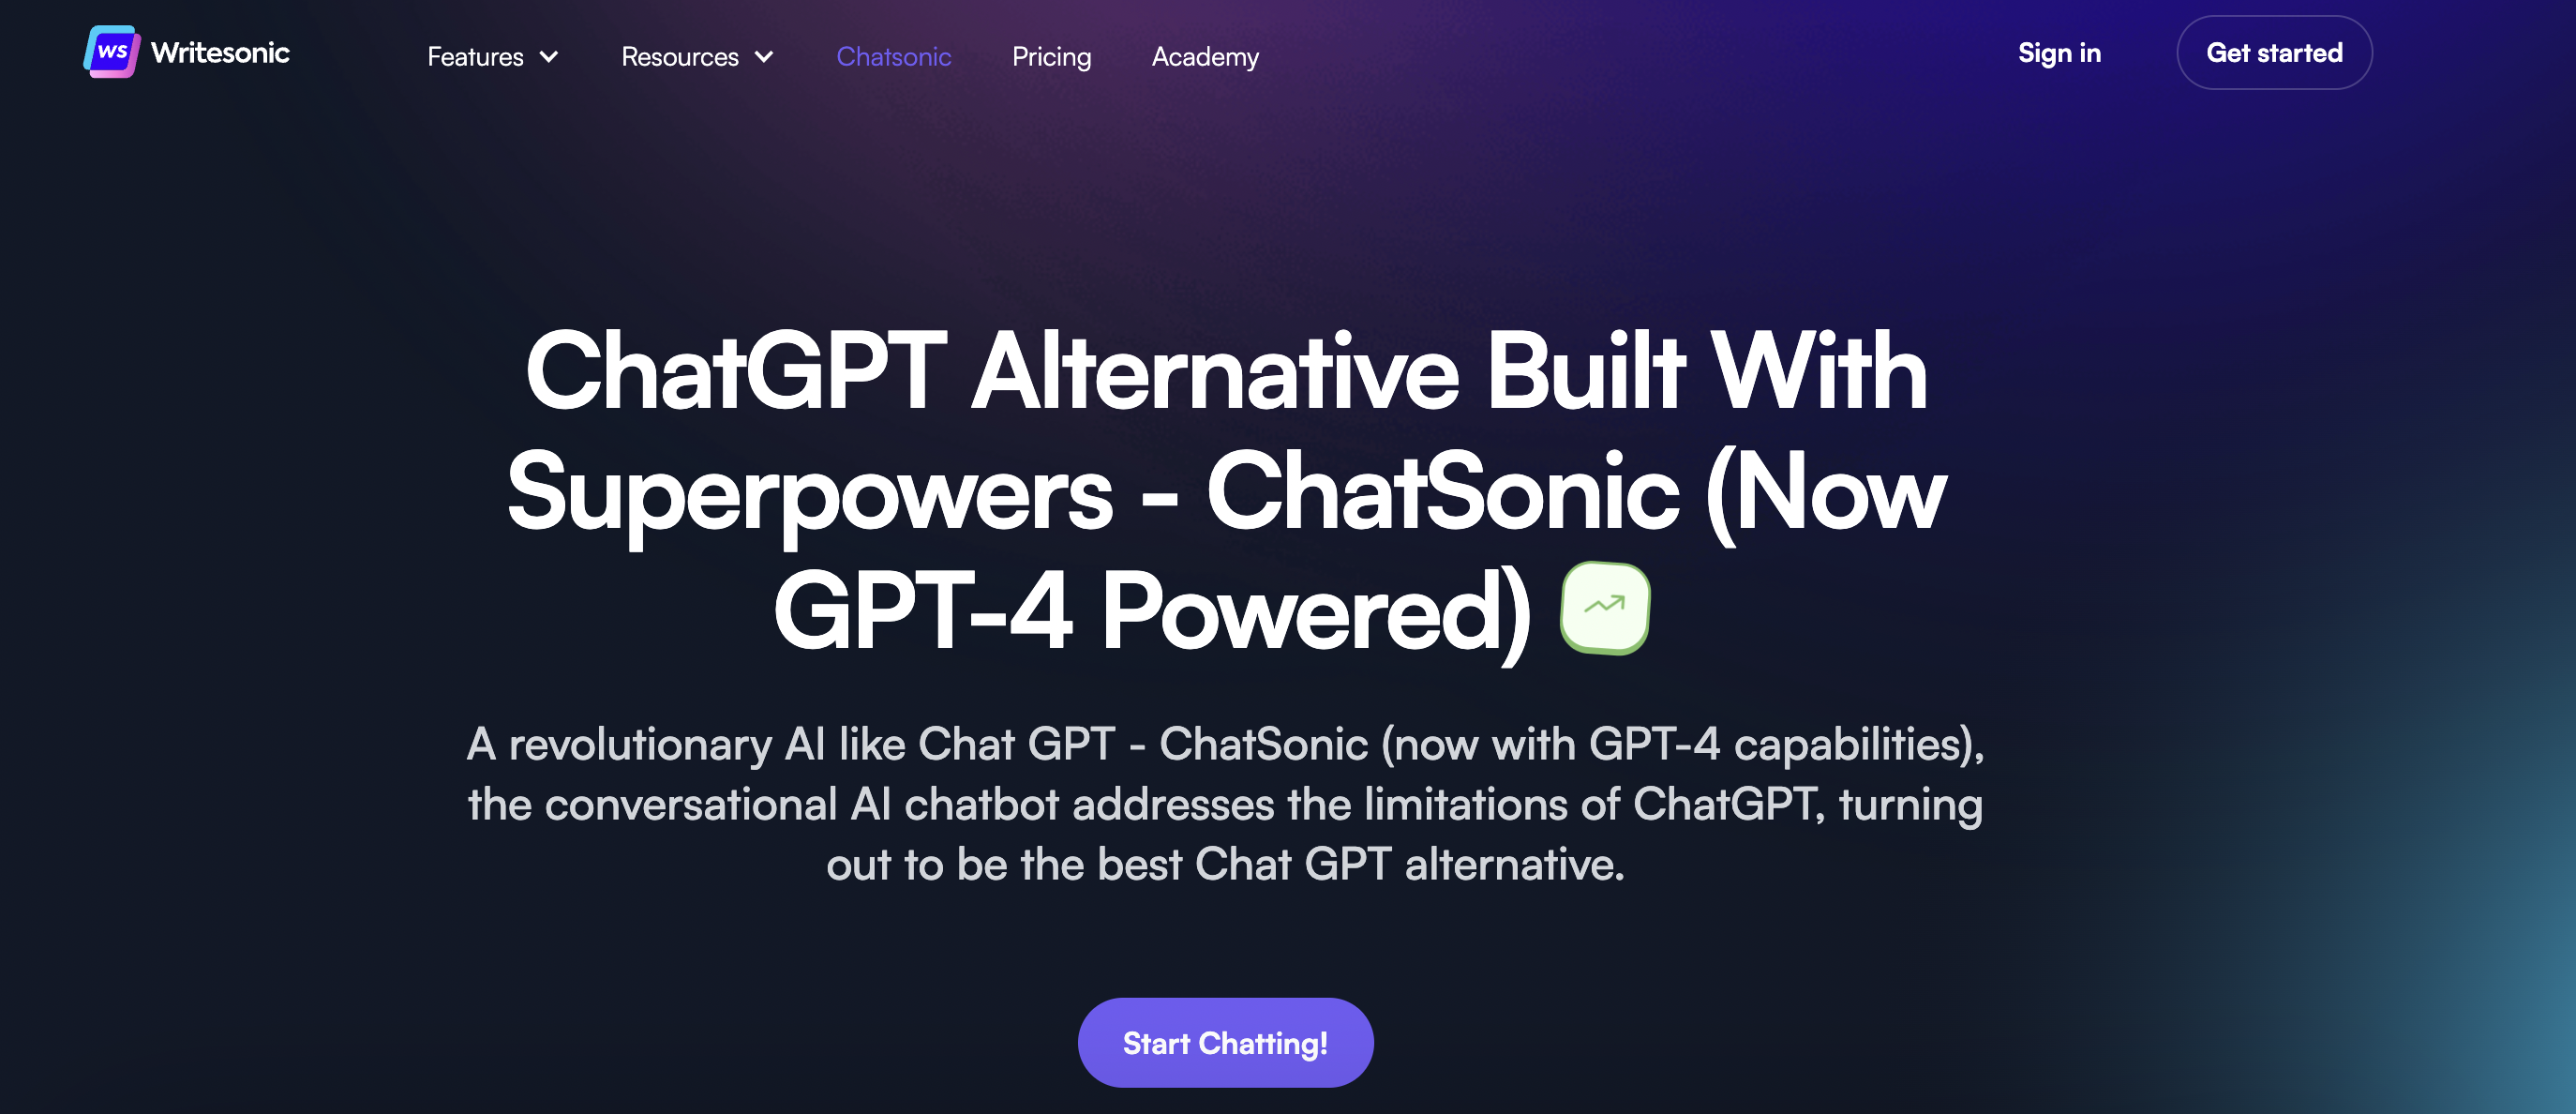 chatgpt alternatives chatsonic